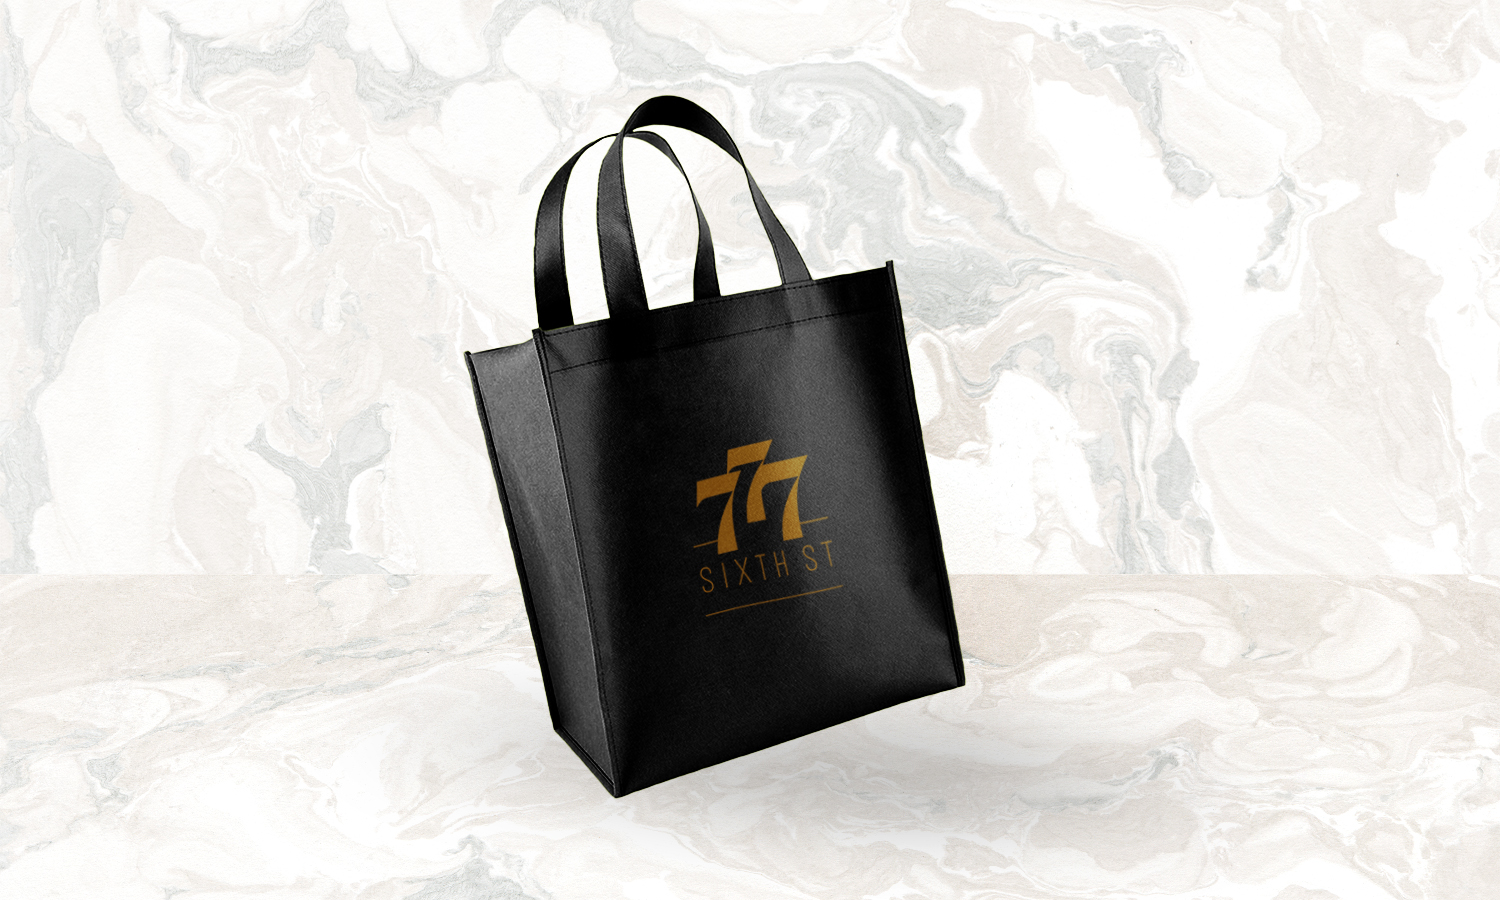 777 Sixth logo on event tote bag